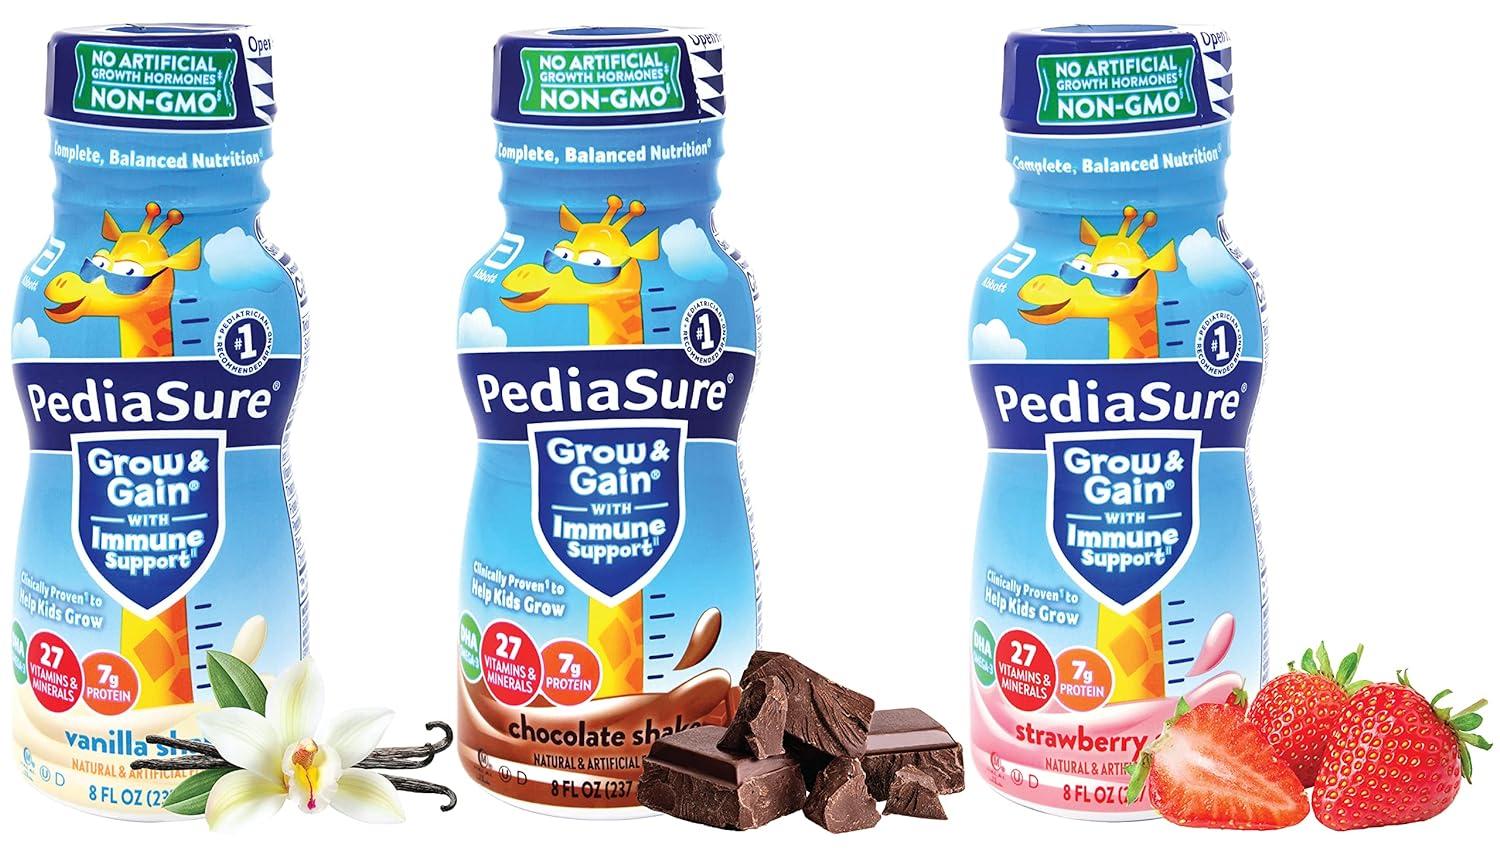 PediaSure Chocolate 6 Cans - 27 Vitamins & Minerals 7g Protein - Exp 5/2/23